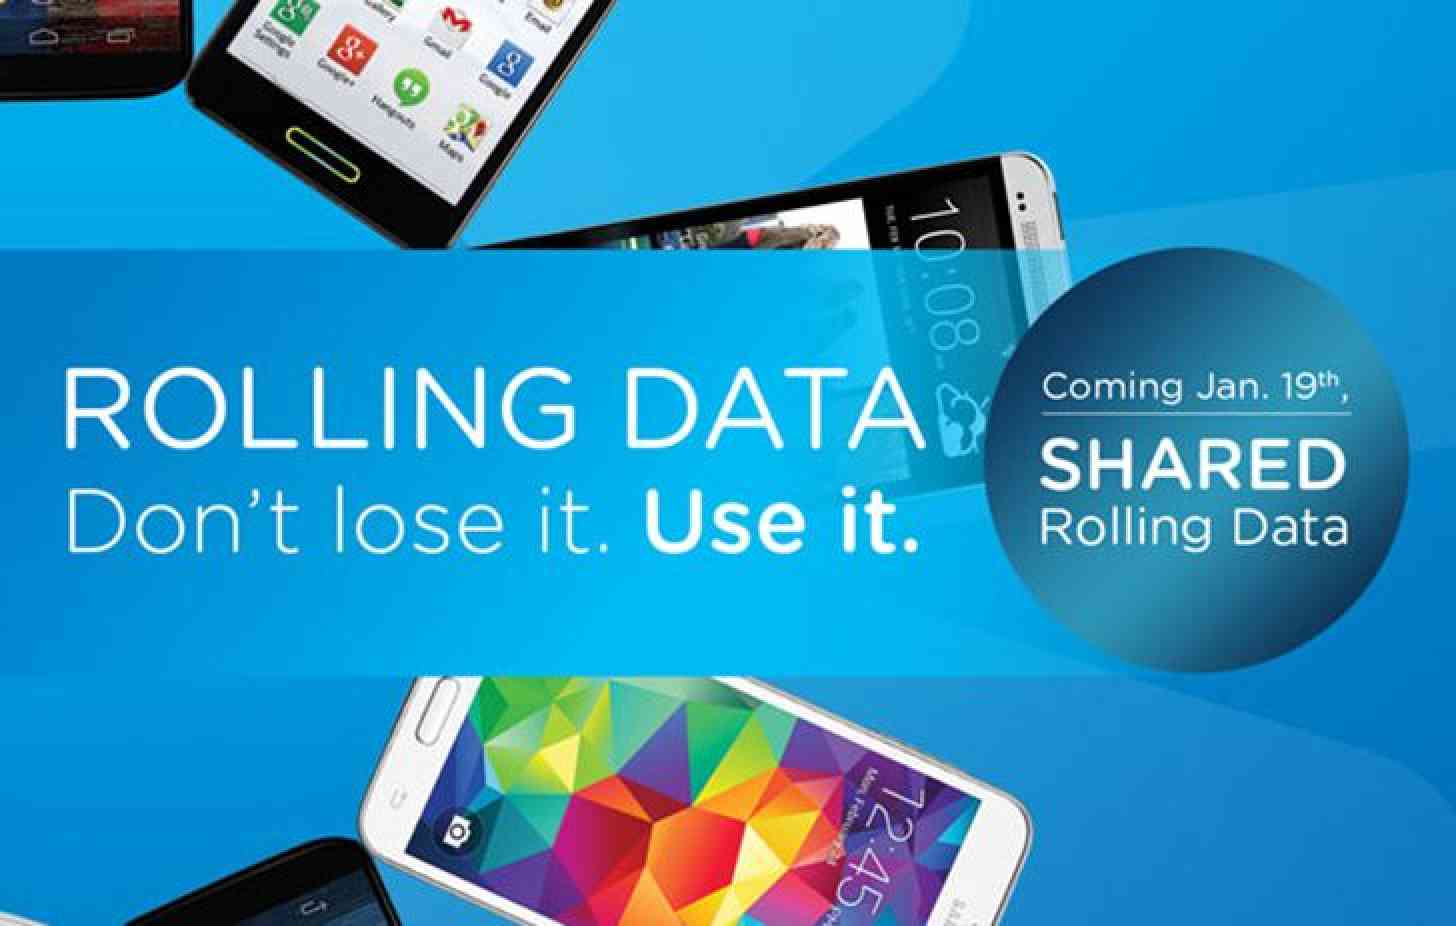 C Spire Wireless shared rolling data